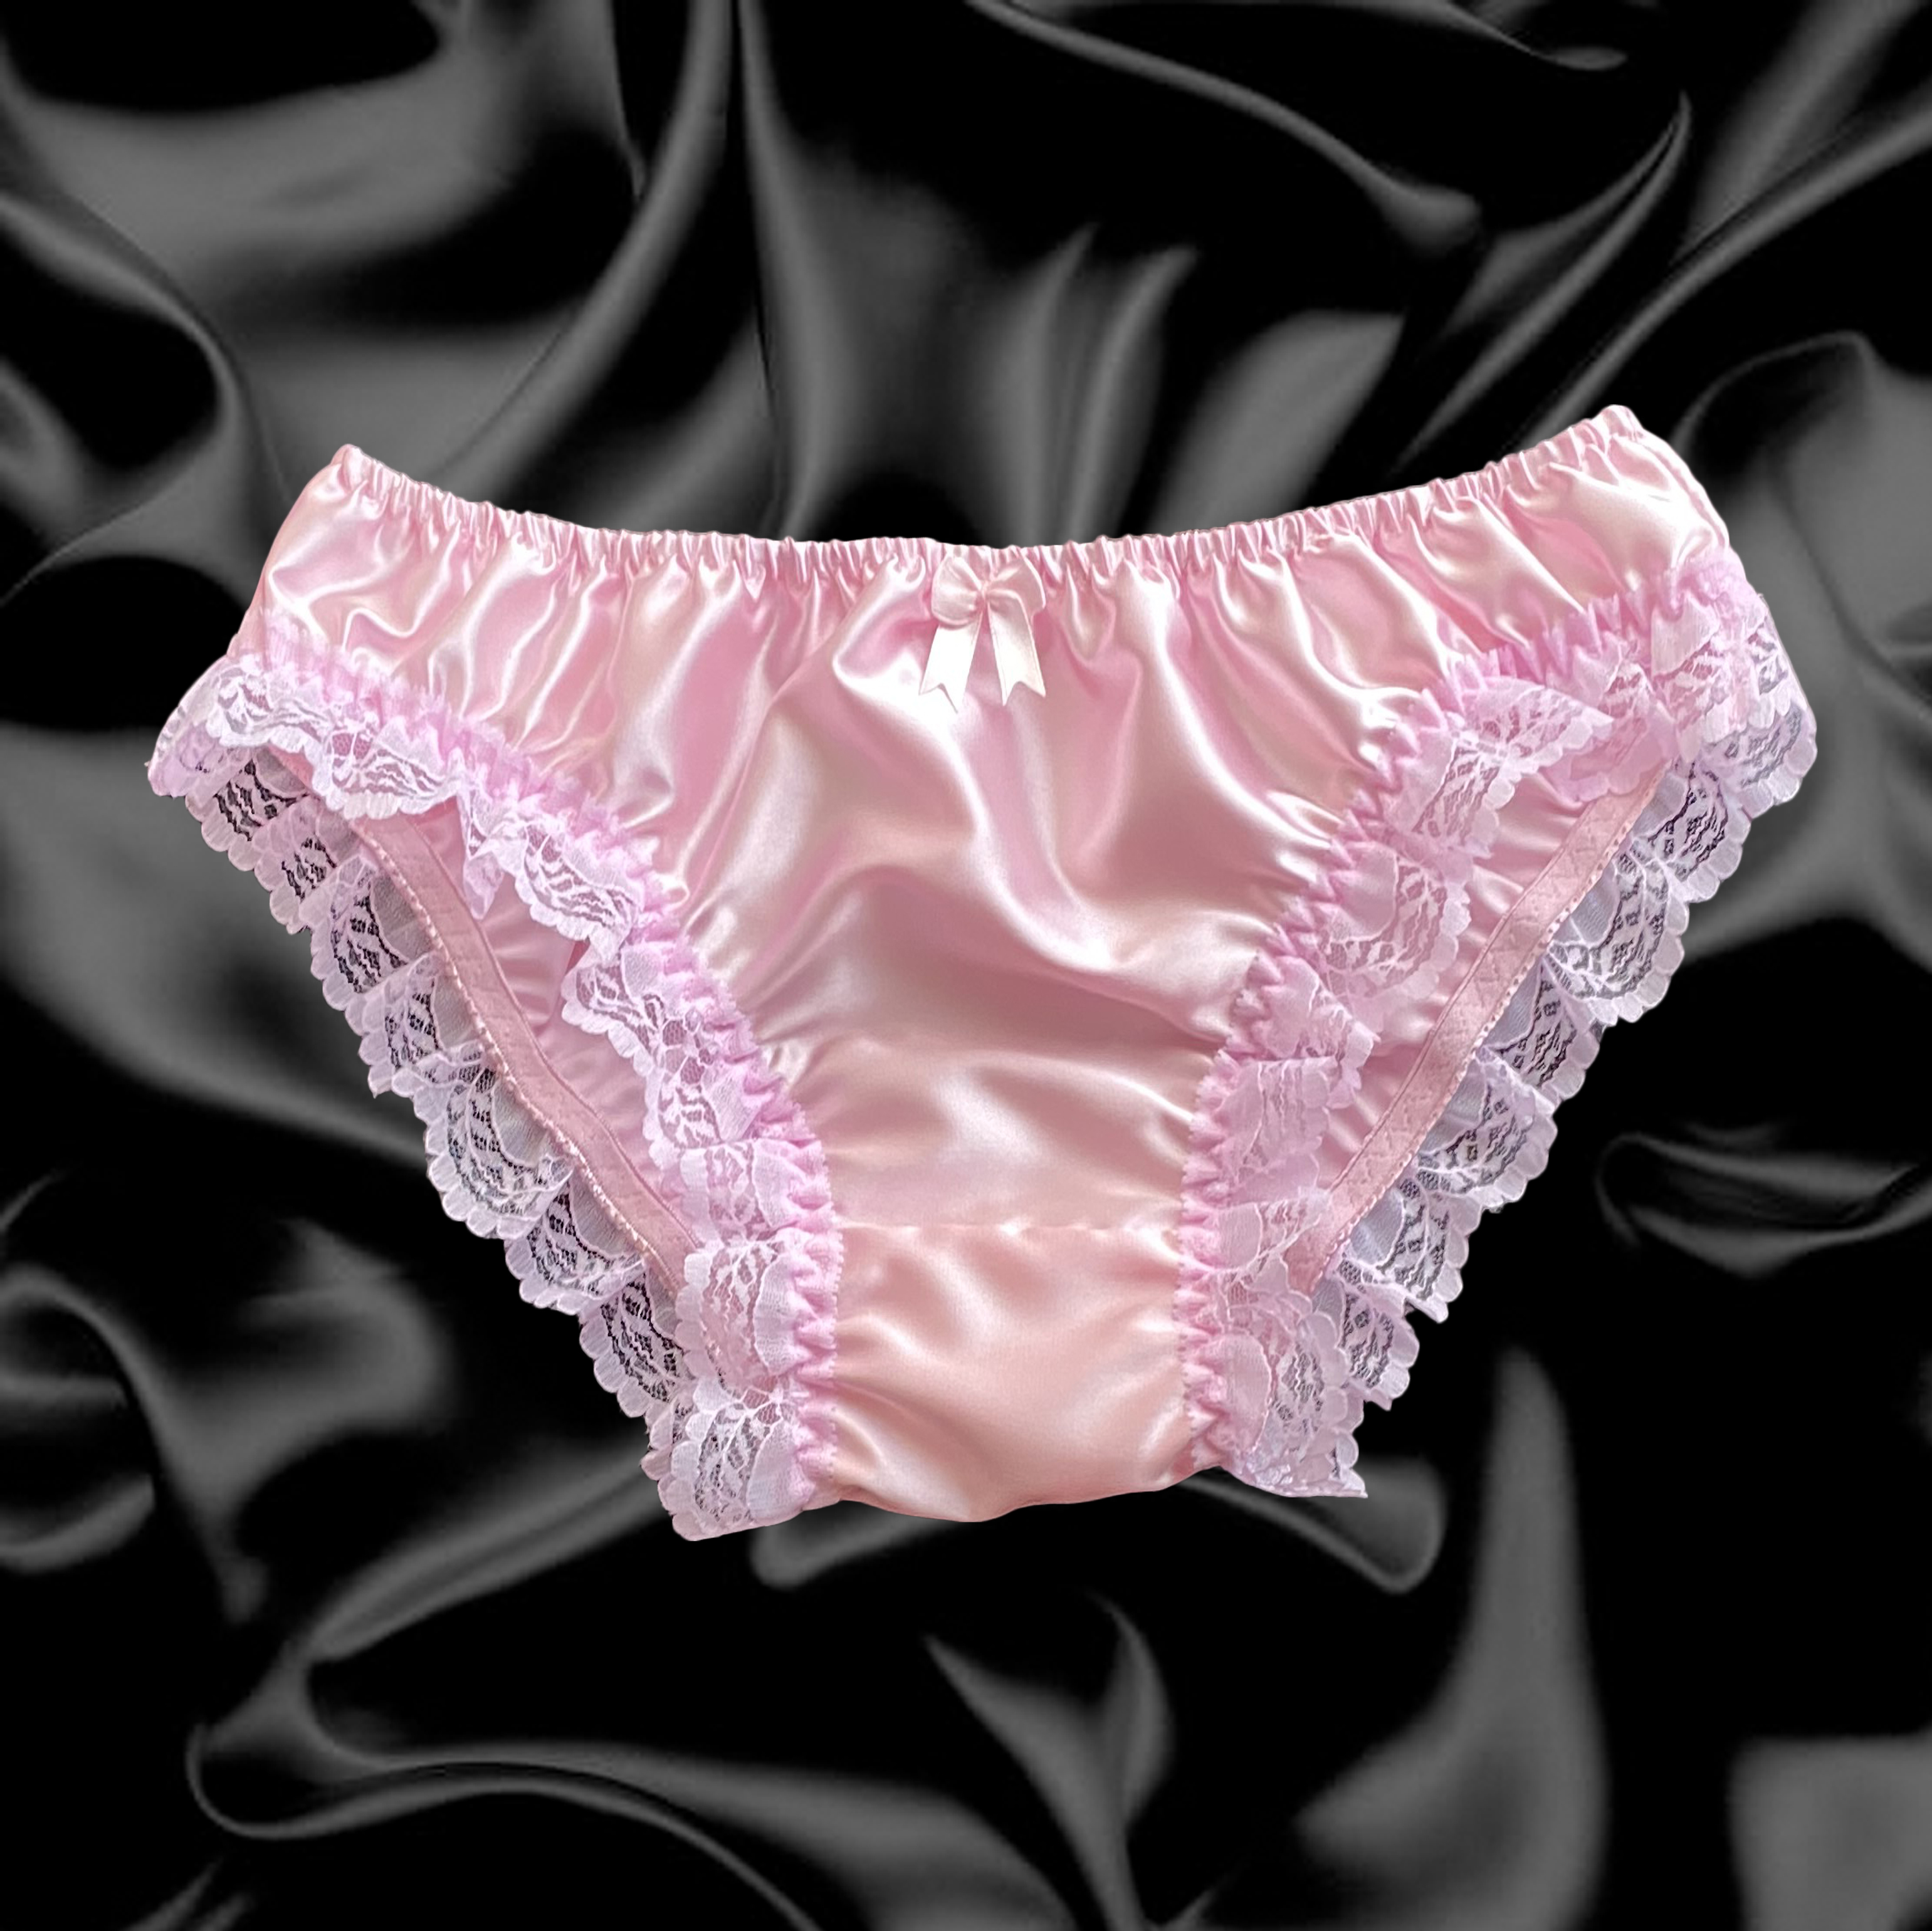 dinesh kumar s add photo pink pantie pics